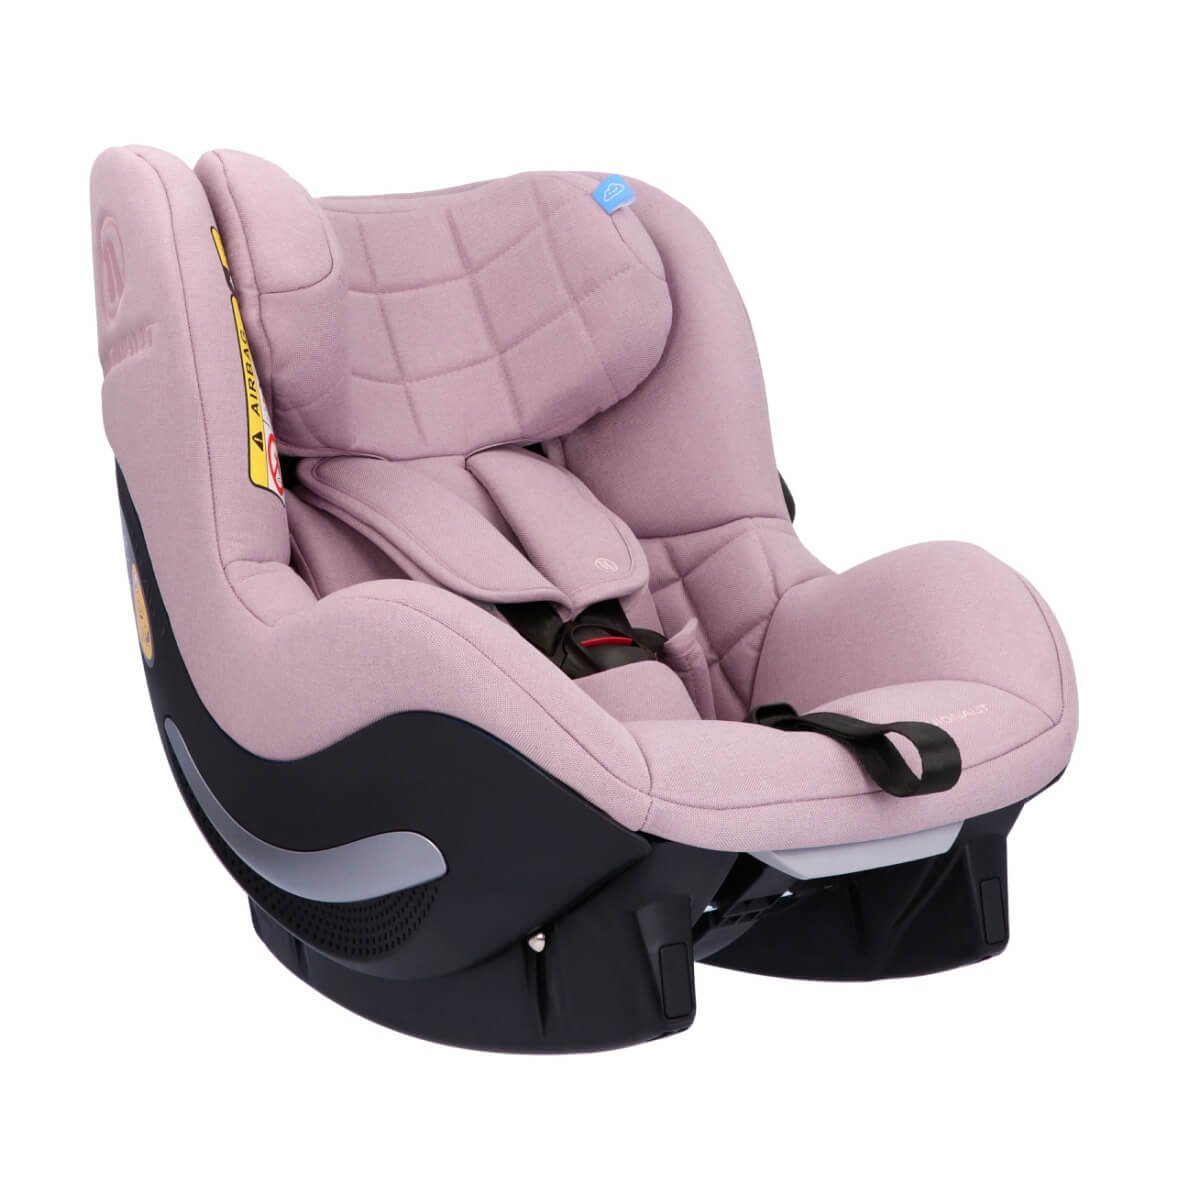 Avionaut Autokindersitz Avionaut AeroFIX 2.0 C Cloud Care - Reboard Kindersitz Pink